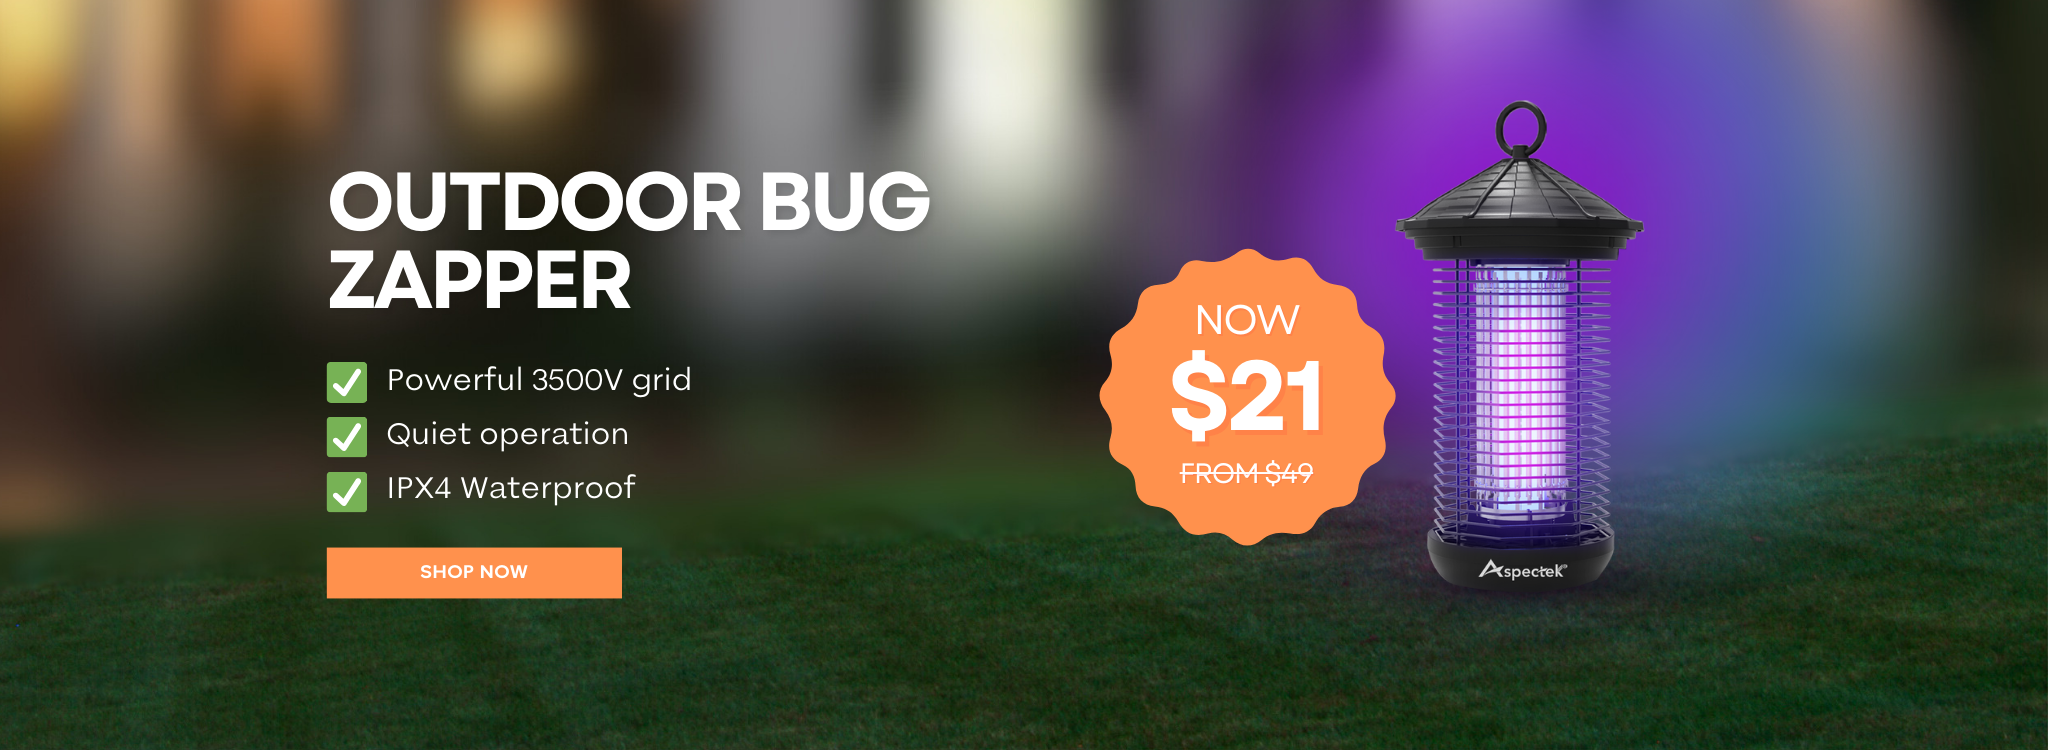 outdoor-bug-zapper-promo-desktop.png